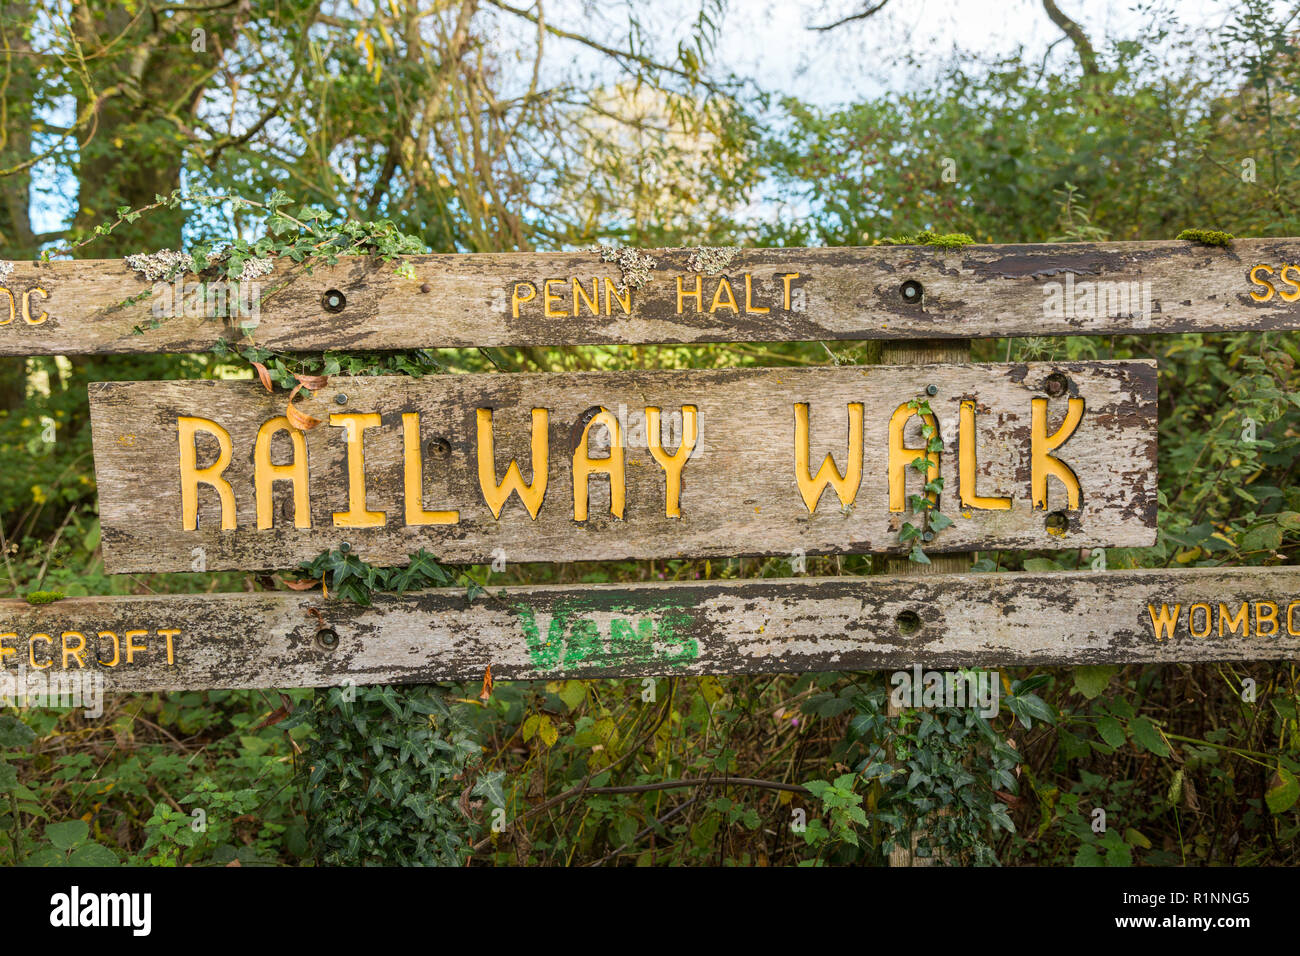 Railway walk, near Wolverhampton, West Midlands UK Stock Photo